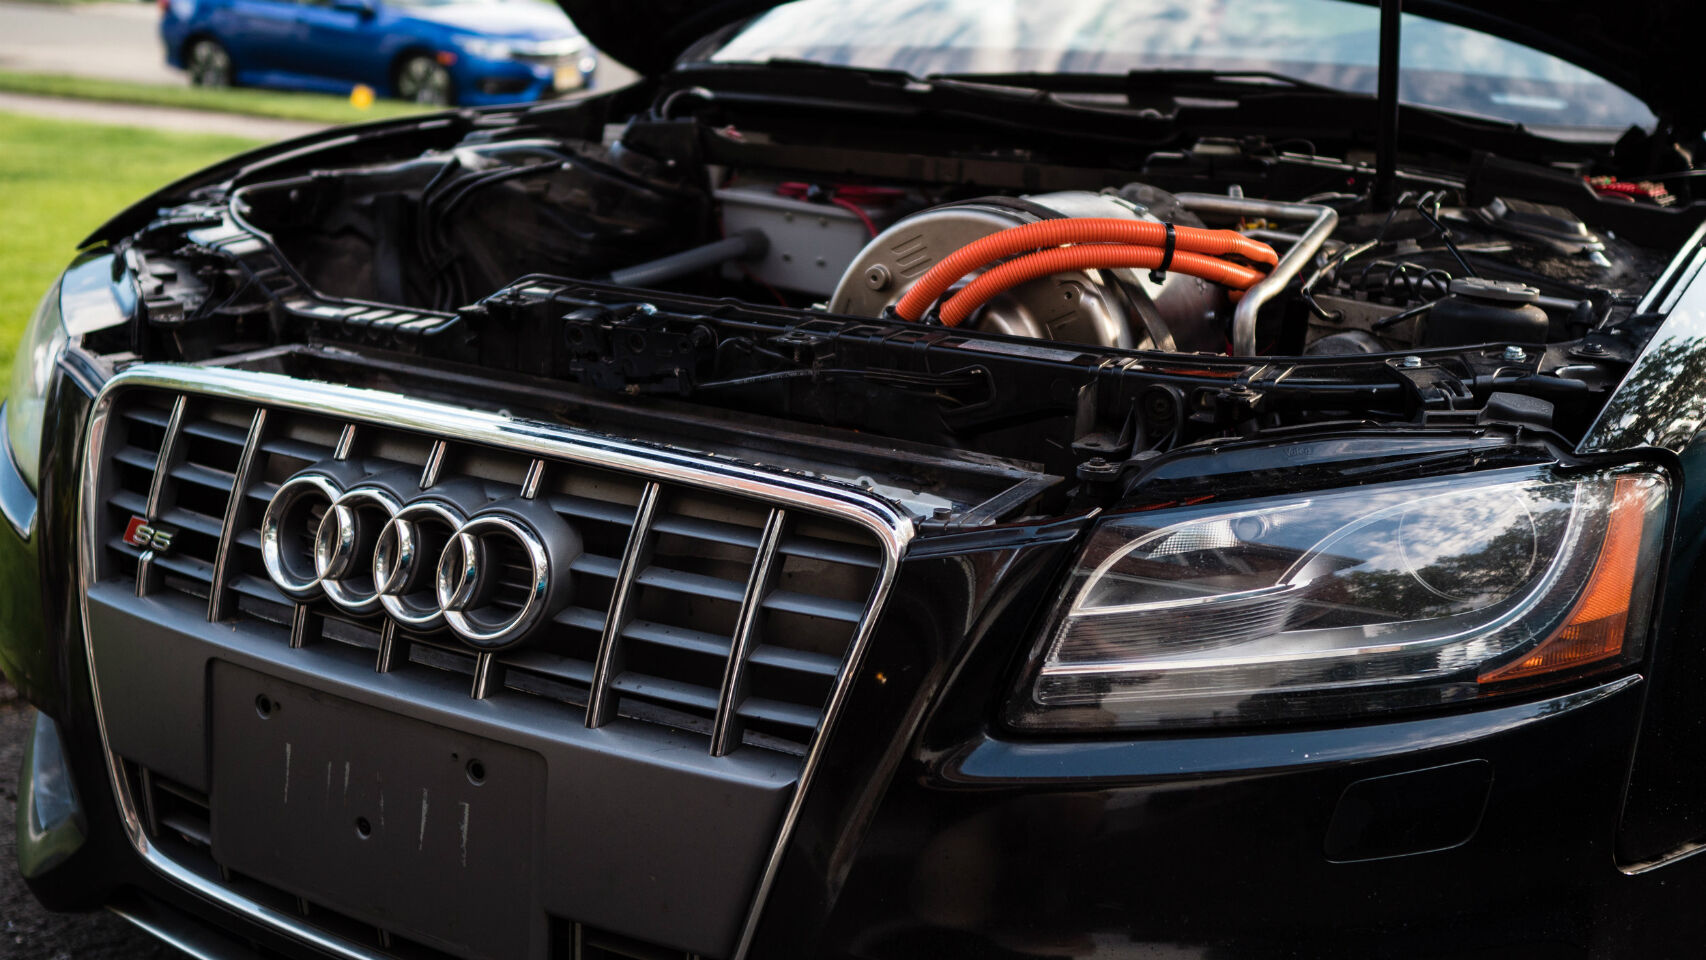 سيارة Audi S5 بمحرك كهربائي وبطاريات طراز Tesla Model S